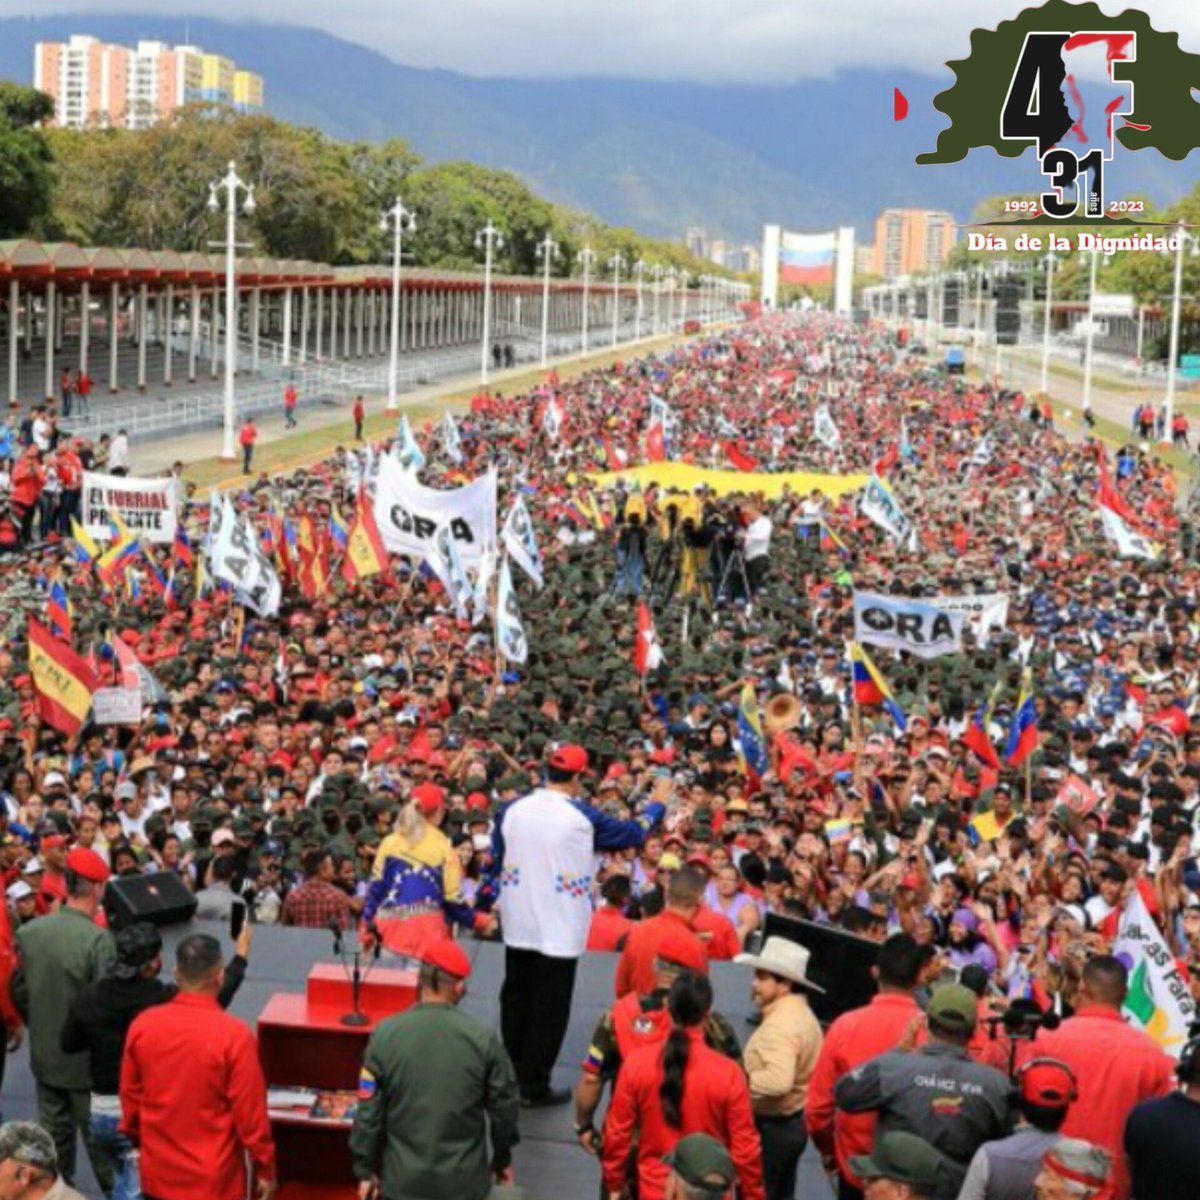 1/2 Güerisney
#4fRebeliónContraElImperio
@PartidoPSUV
@NicolasMaduro
@dcabellor
#FebreroRebeldeConChávez